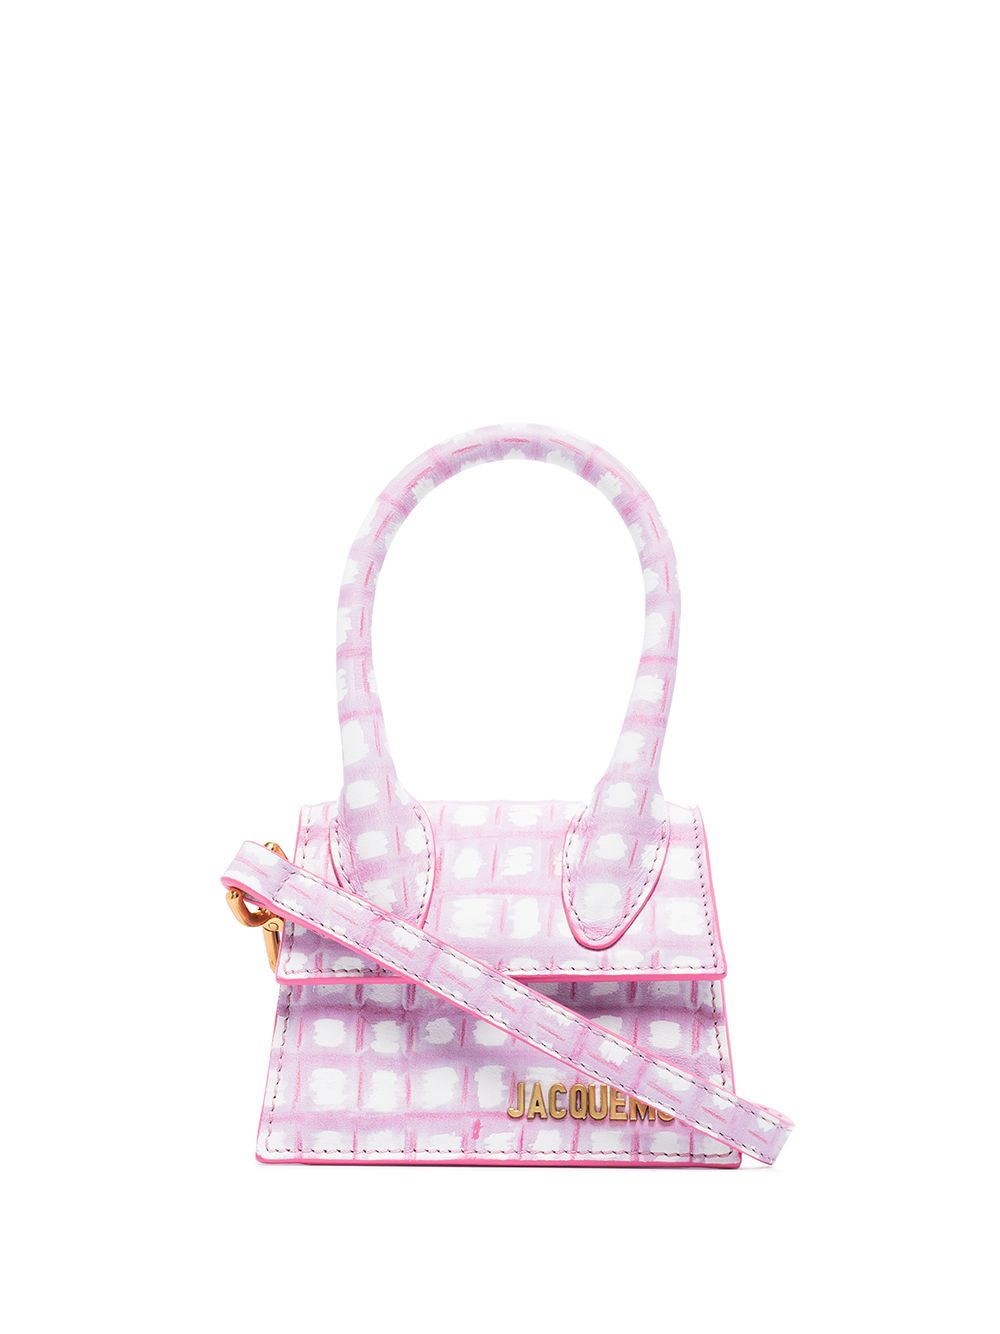 фото Jacquemus pink and white le chiquito check print mini bag